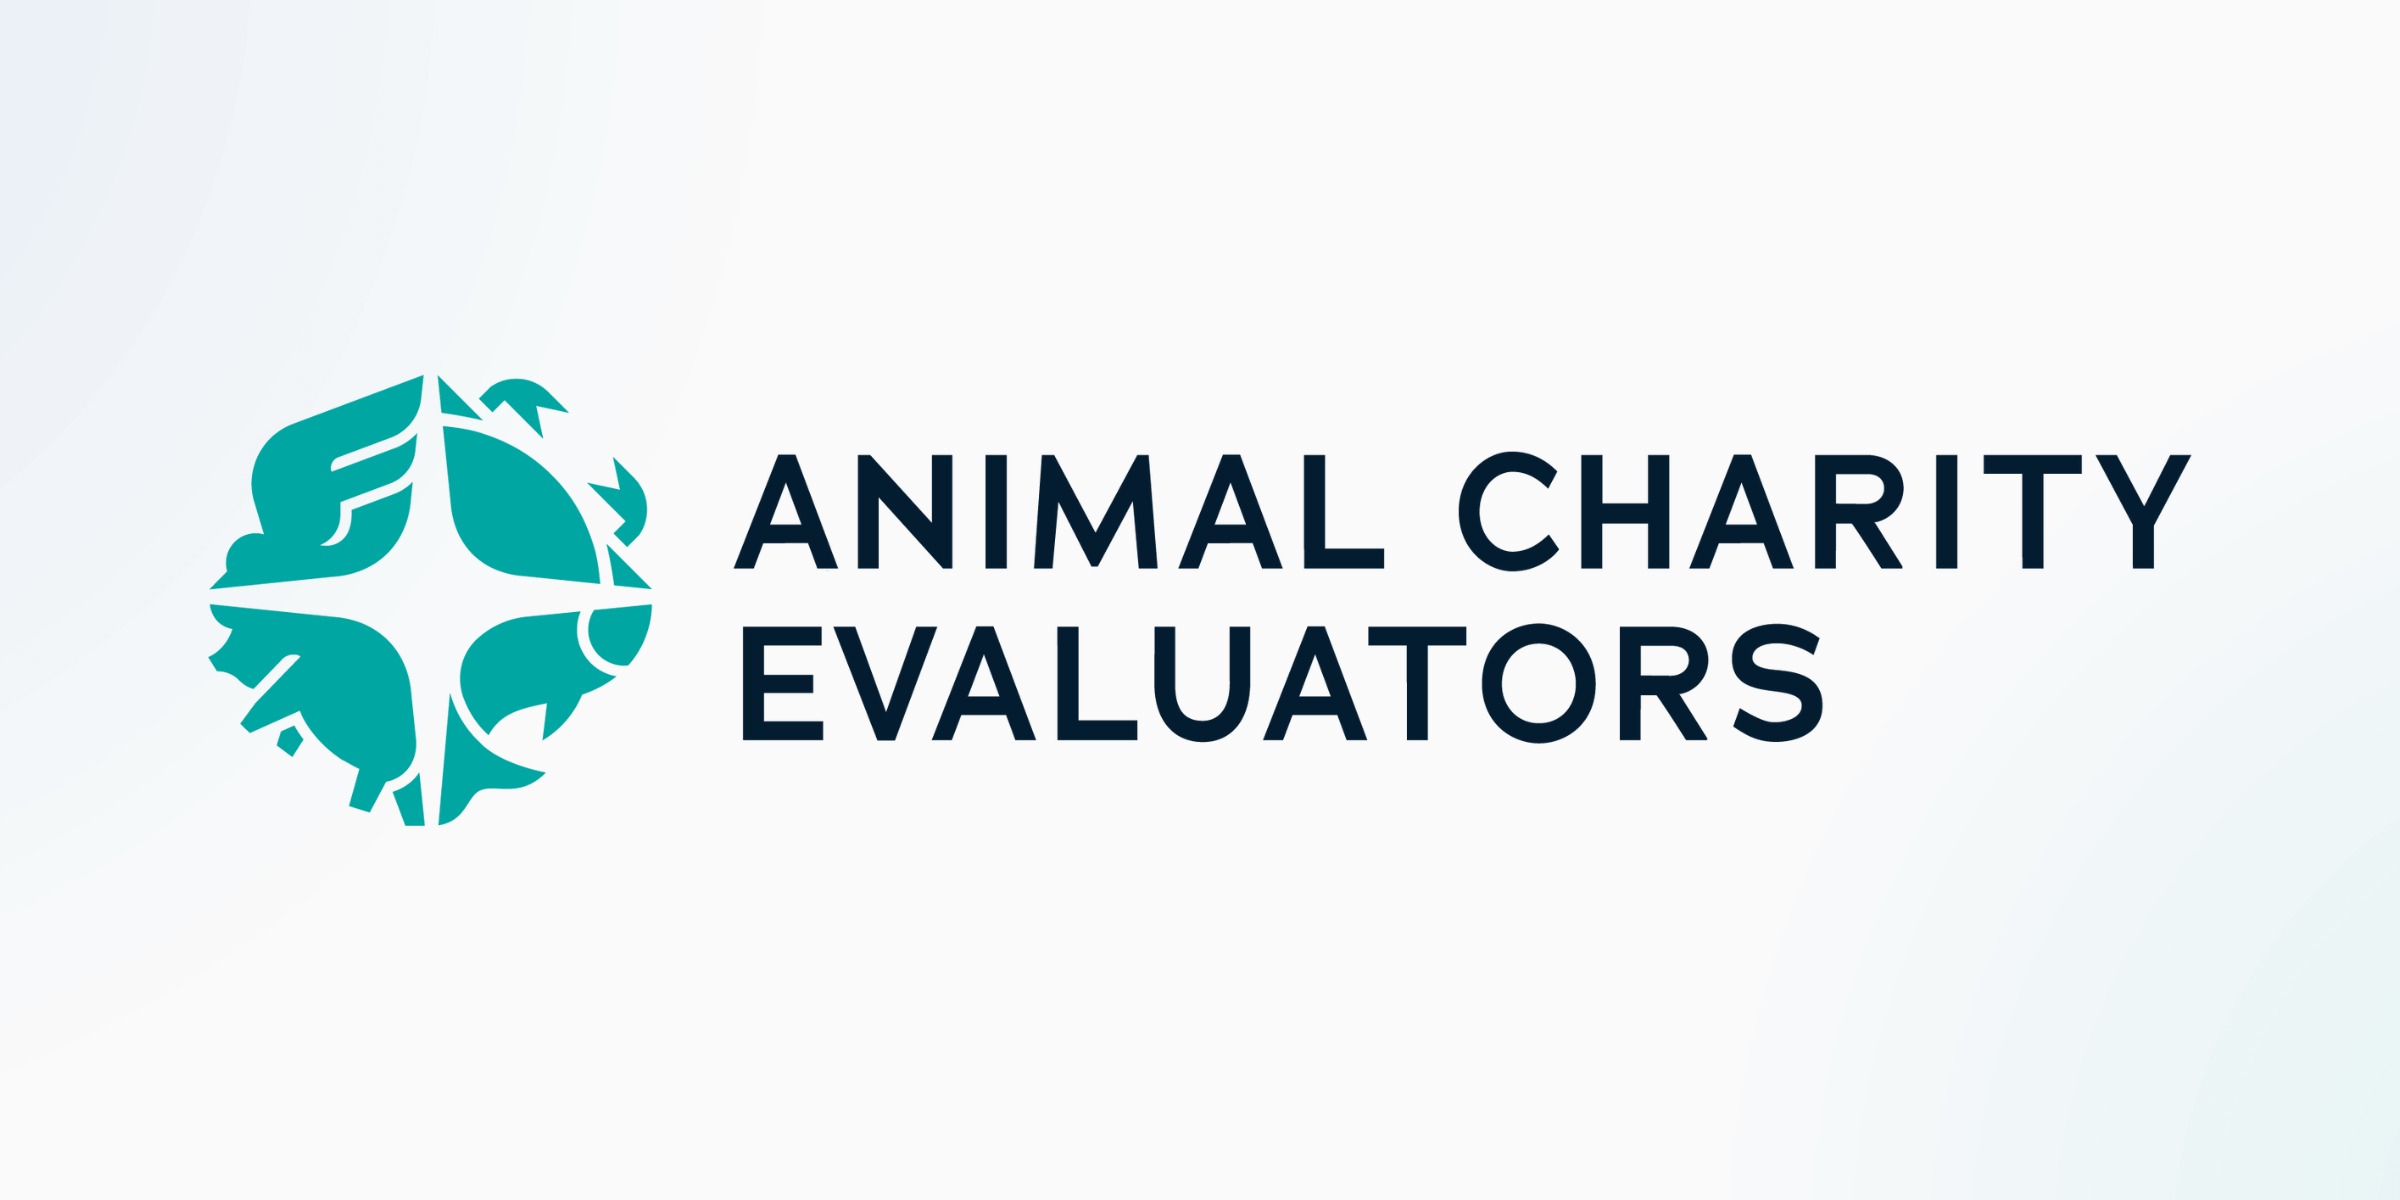 (c) Animalcharityevaluators.org